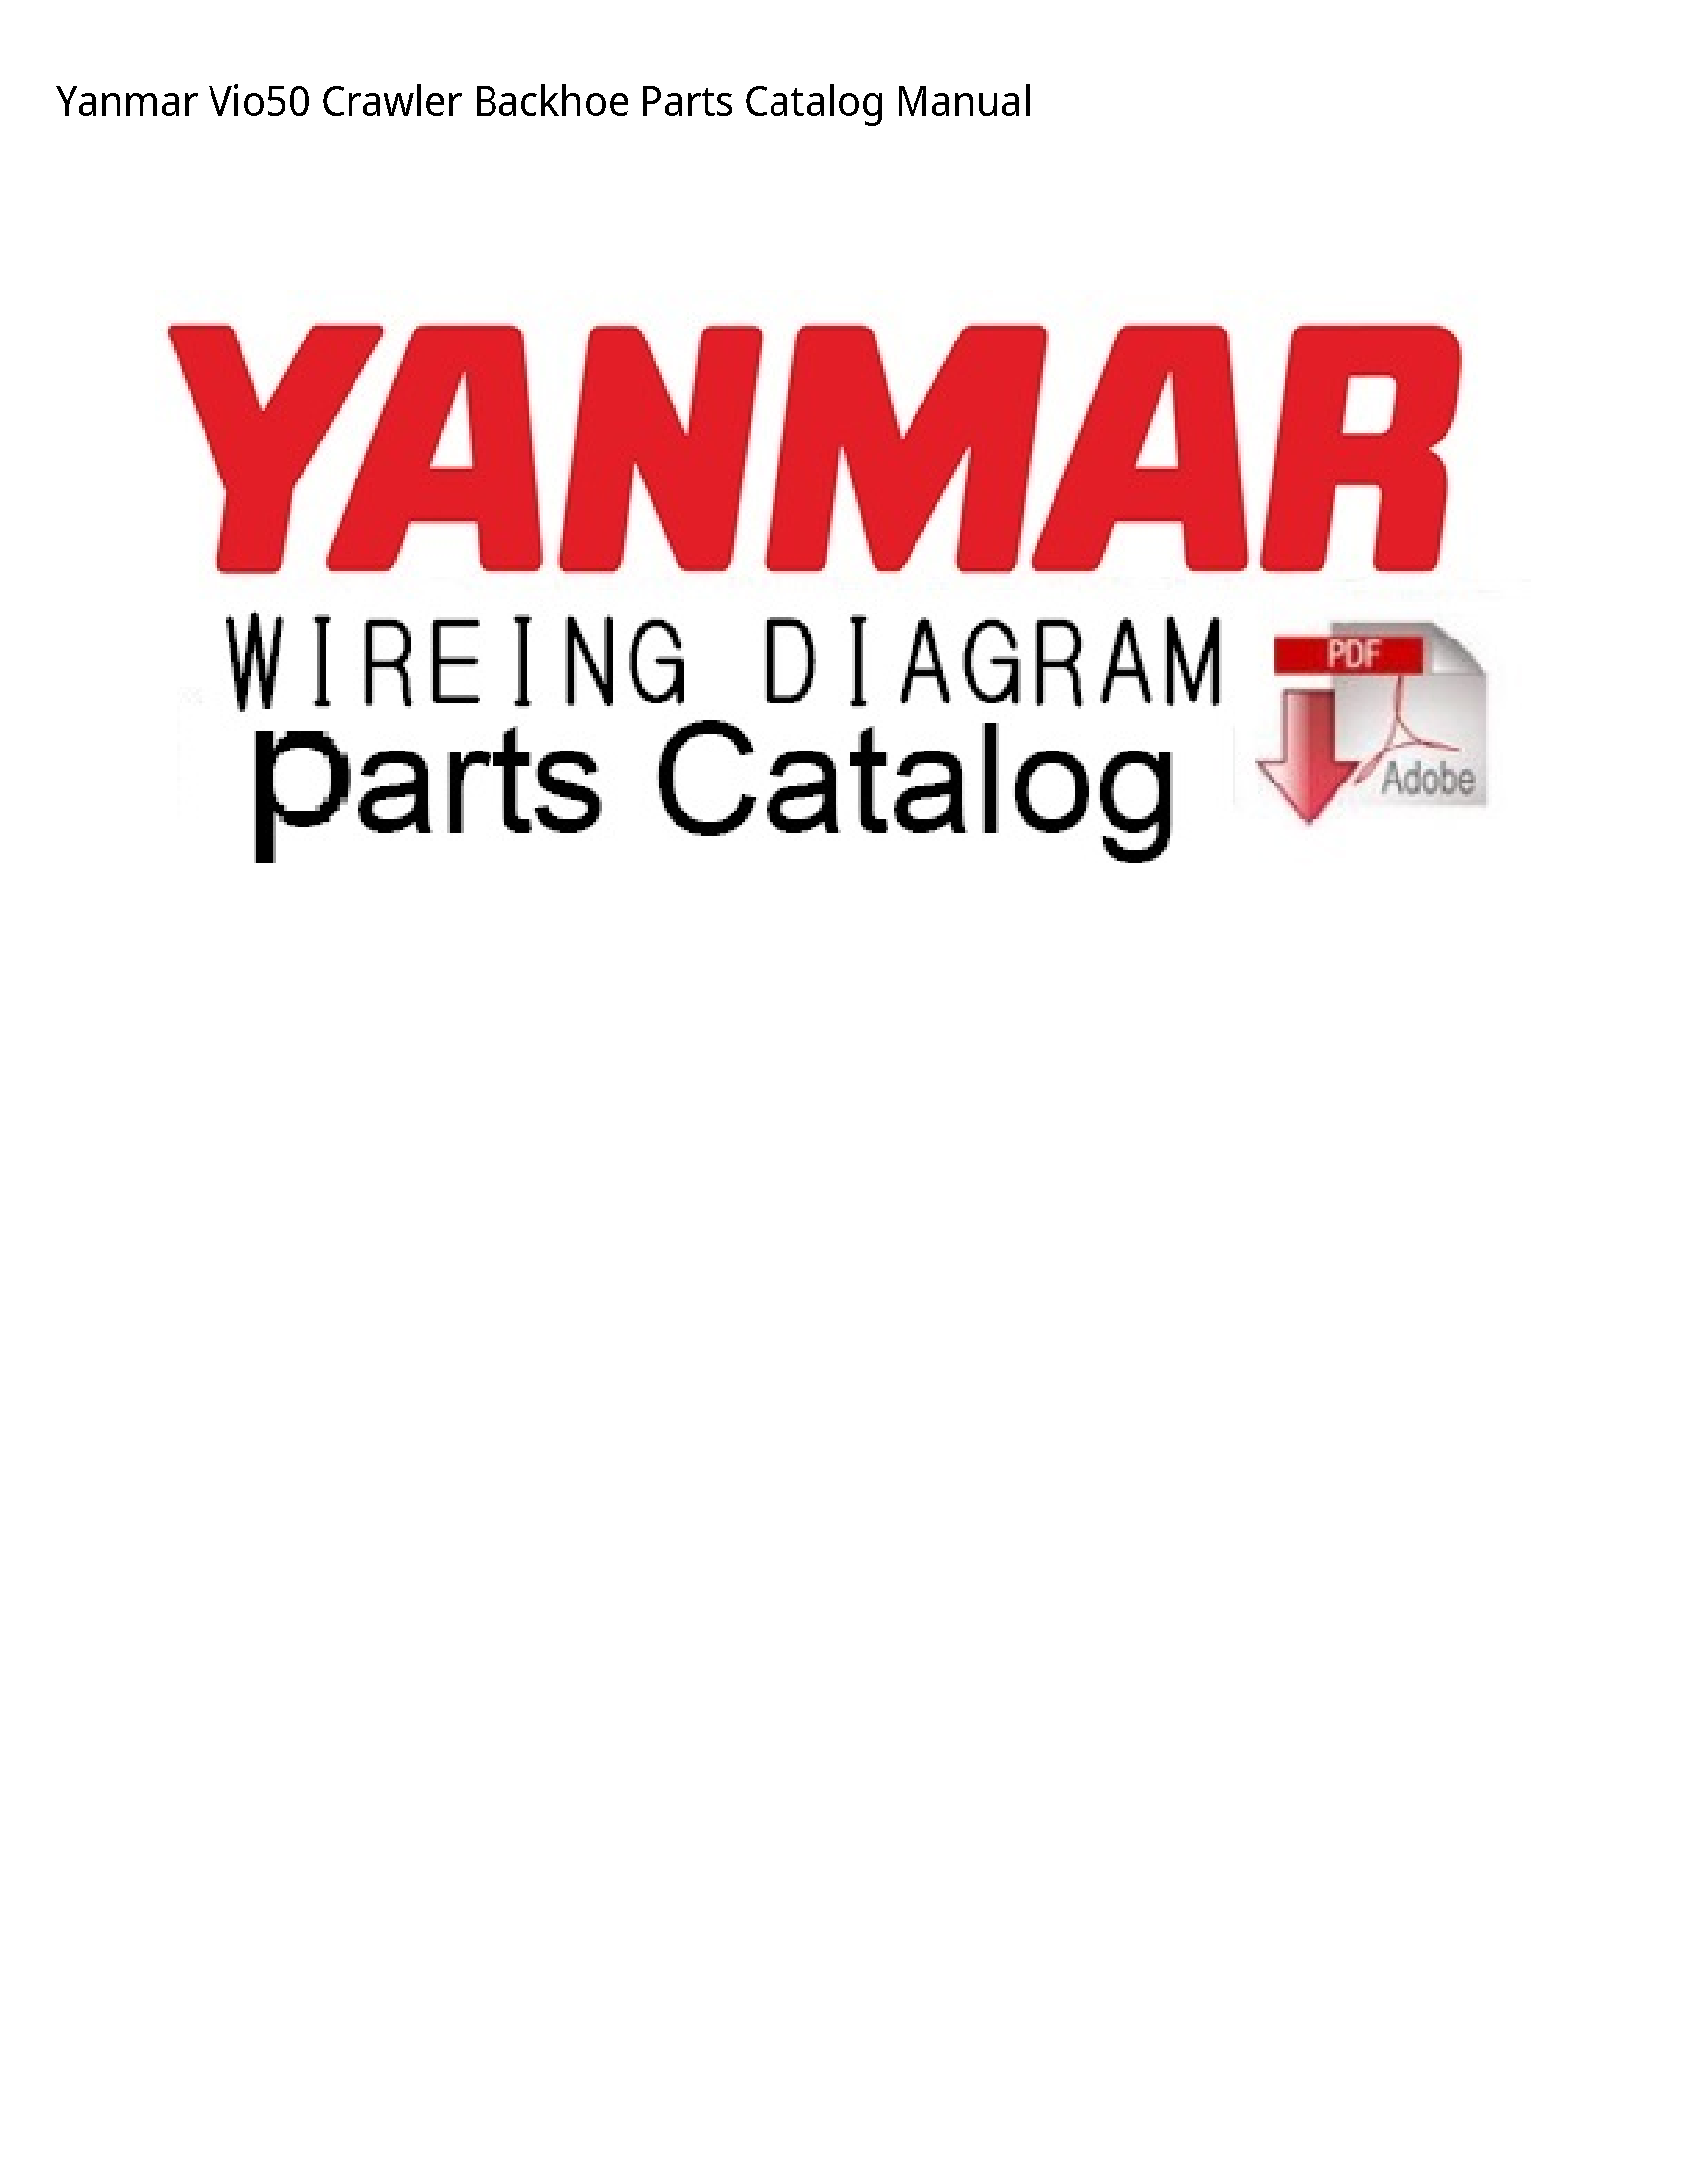 Yanmar Vio50 Crawler Backhoe Parts Catalog manual